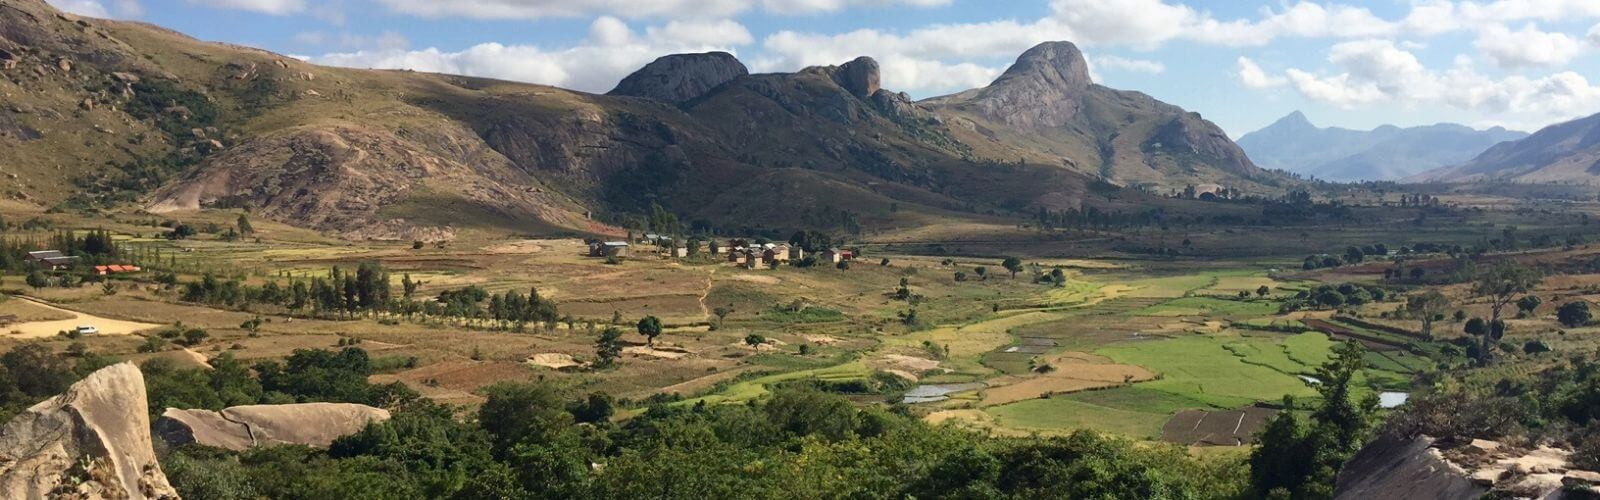 Madagascar, une terre de contrastes Double Sens